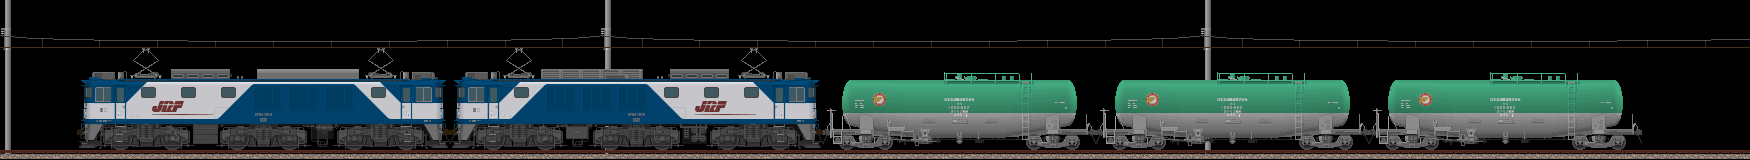 EF64 1000番台の牽く石油貨物列車(2012/5/19更新)